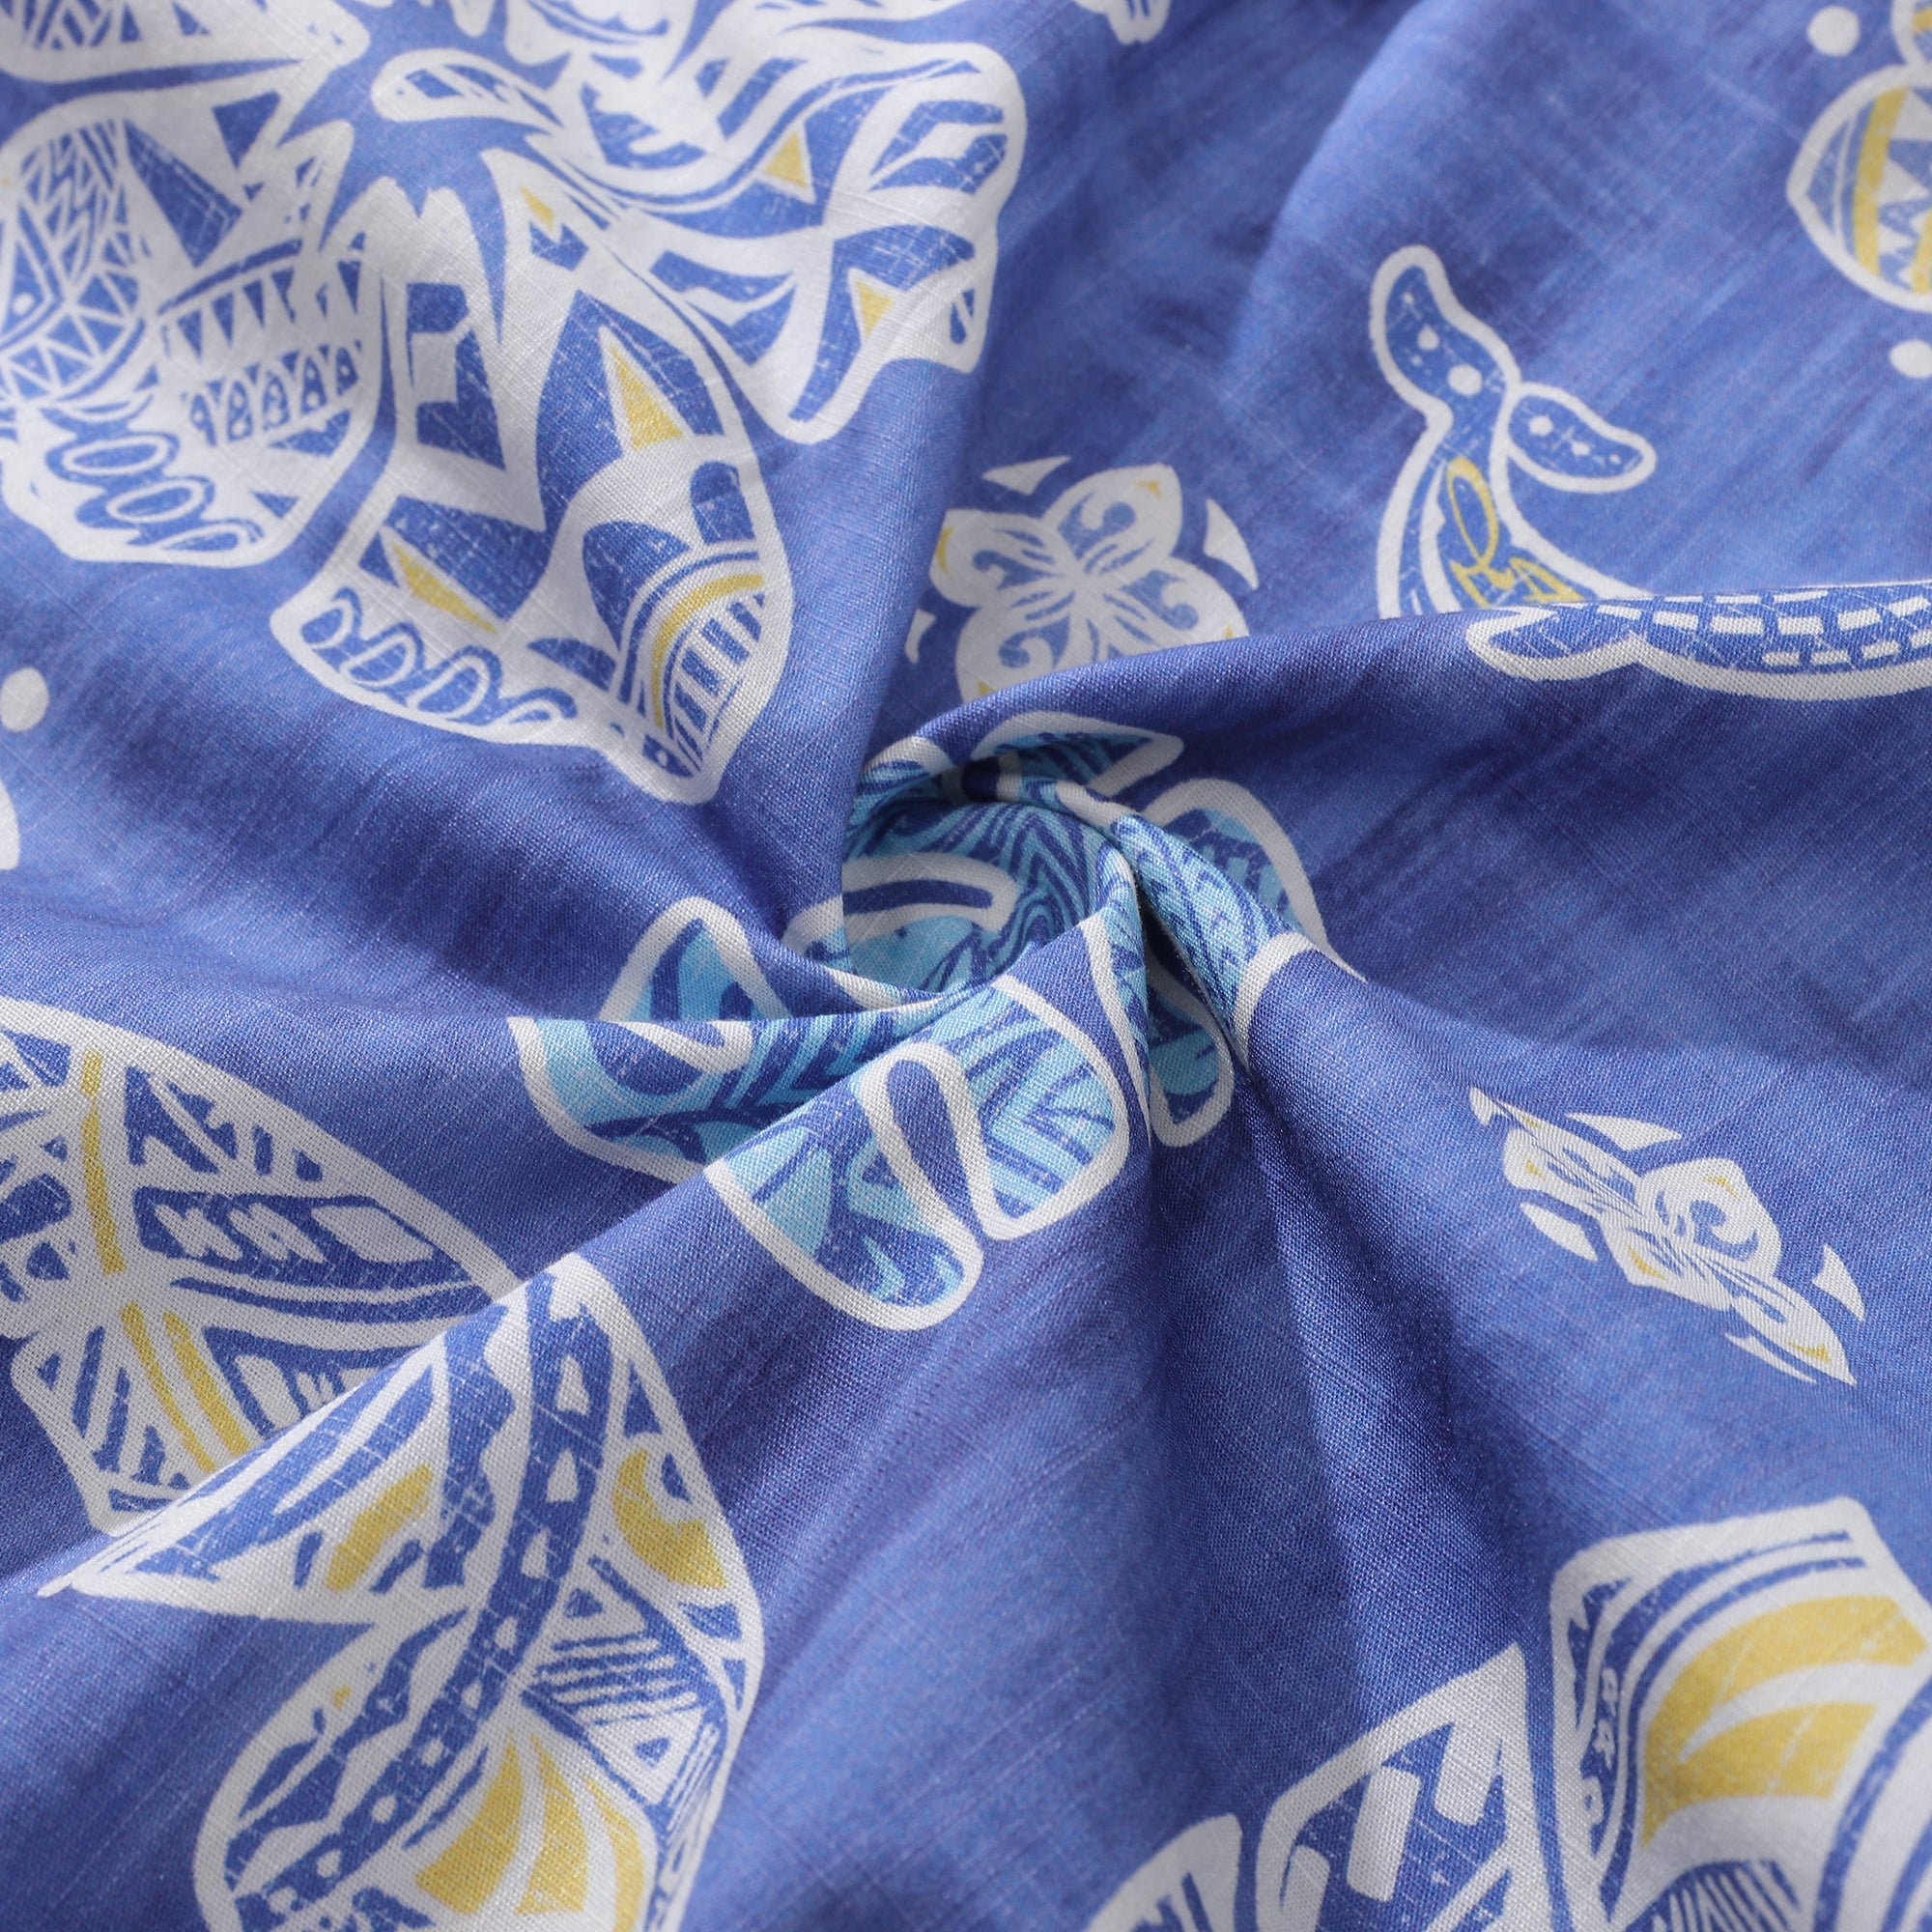 Men's Hawaiian Shirt Native Hawaiian Plants Cotton Button-down Short Sleeve Aloha Shirt